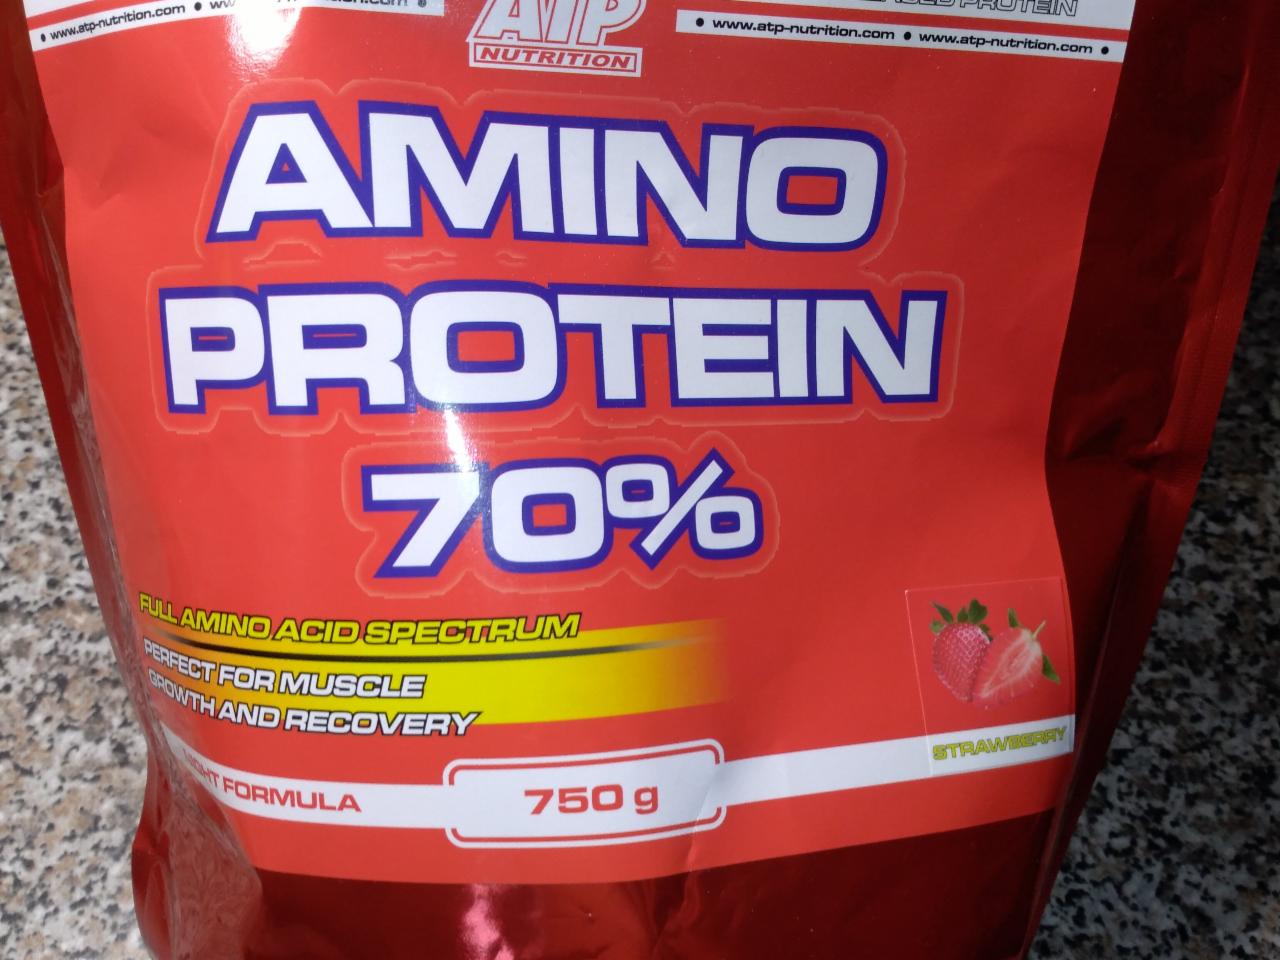 Fotografie - ATP NUTRITION AMINO PROTEÍN 70% strawberry